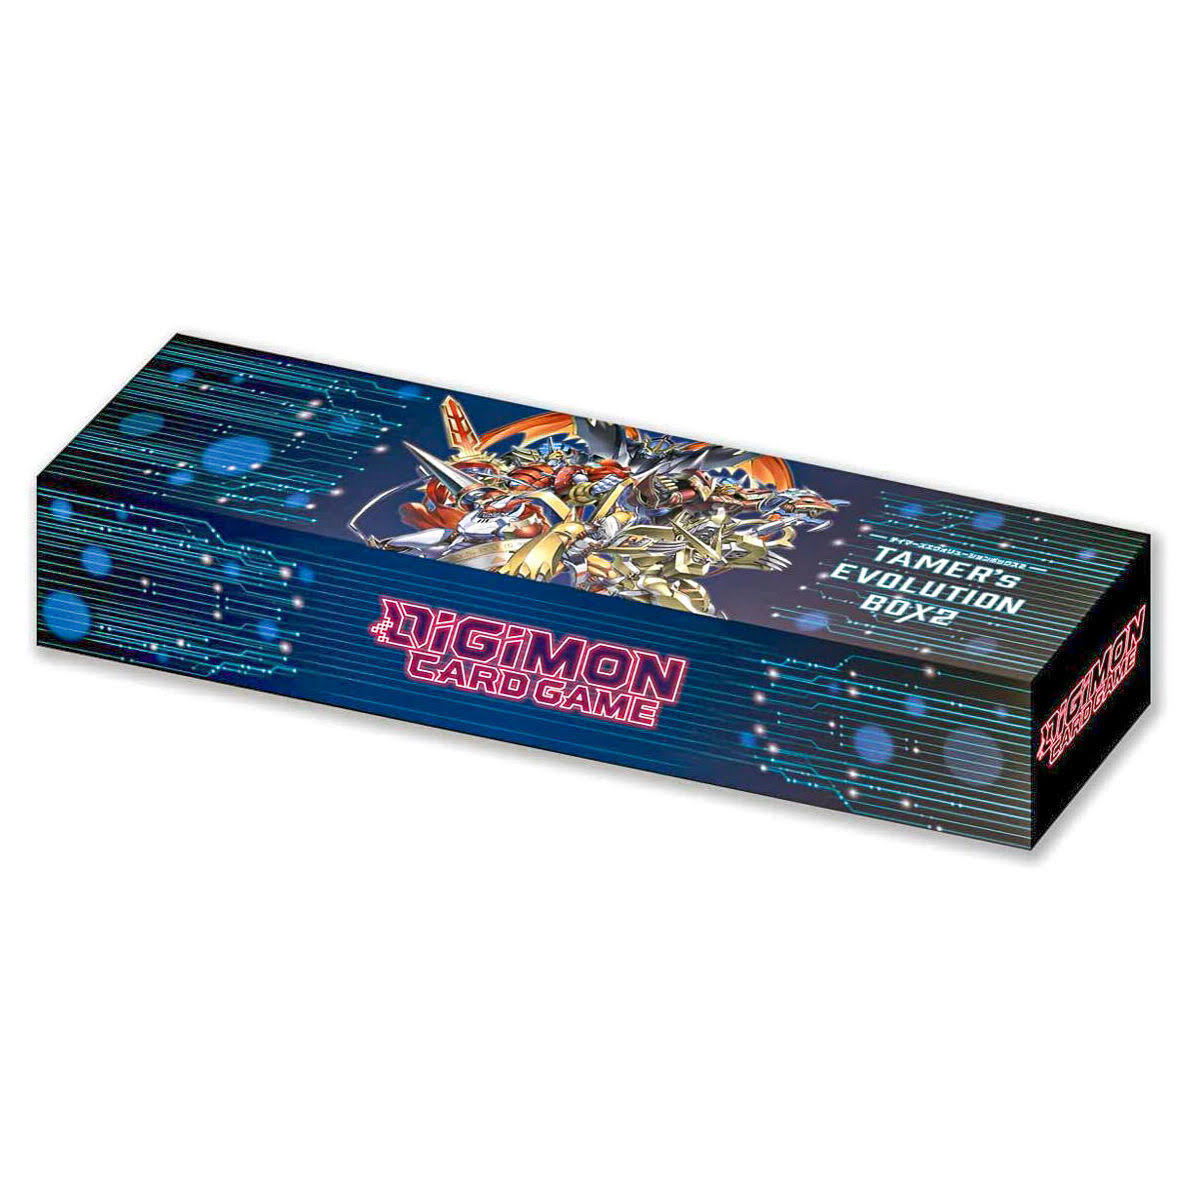 Digimon Card Game - Tamers Evolution Box 2